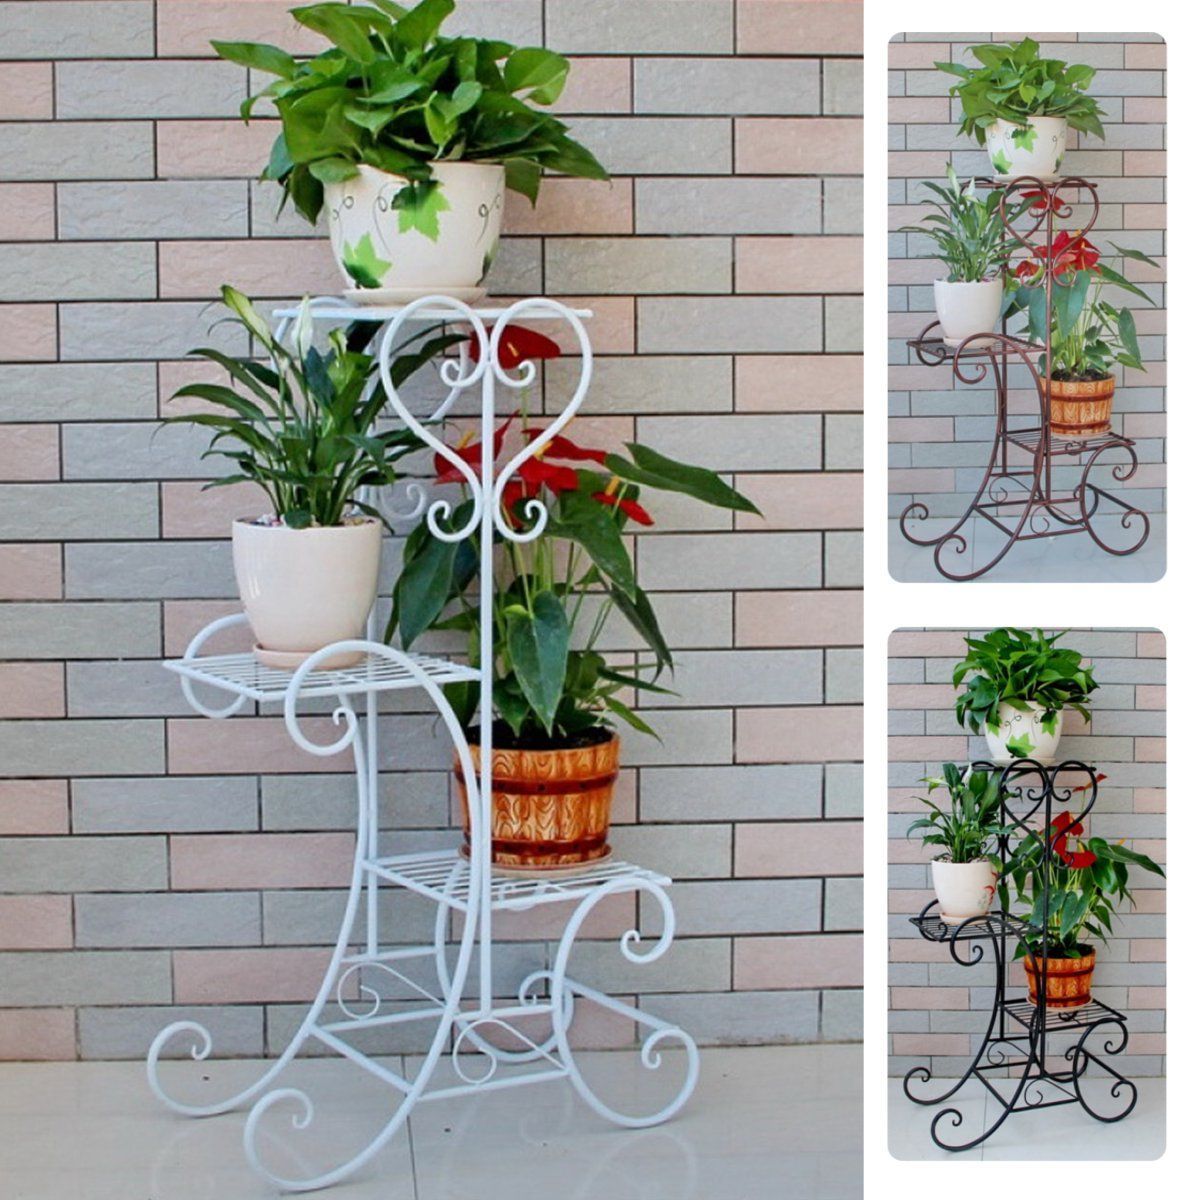 3-Tier-Garden-Planter-Stand-Flower-Pot-Plant-Display-Shelf-Balcony-Home-Decorations-1476435